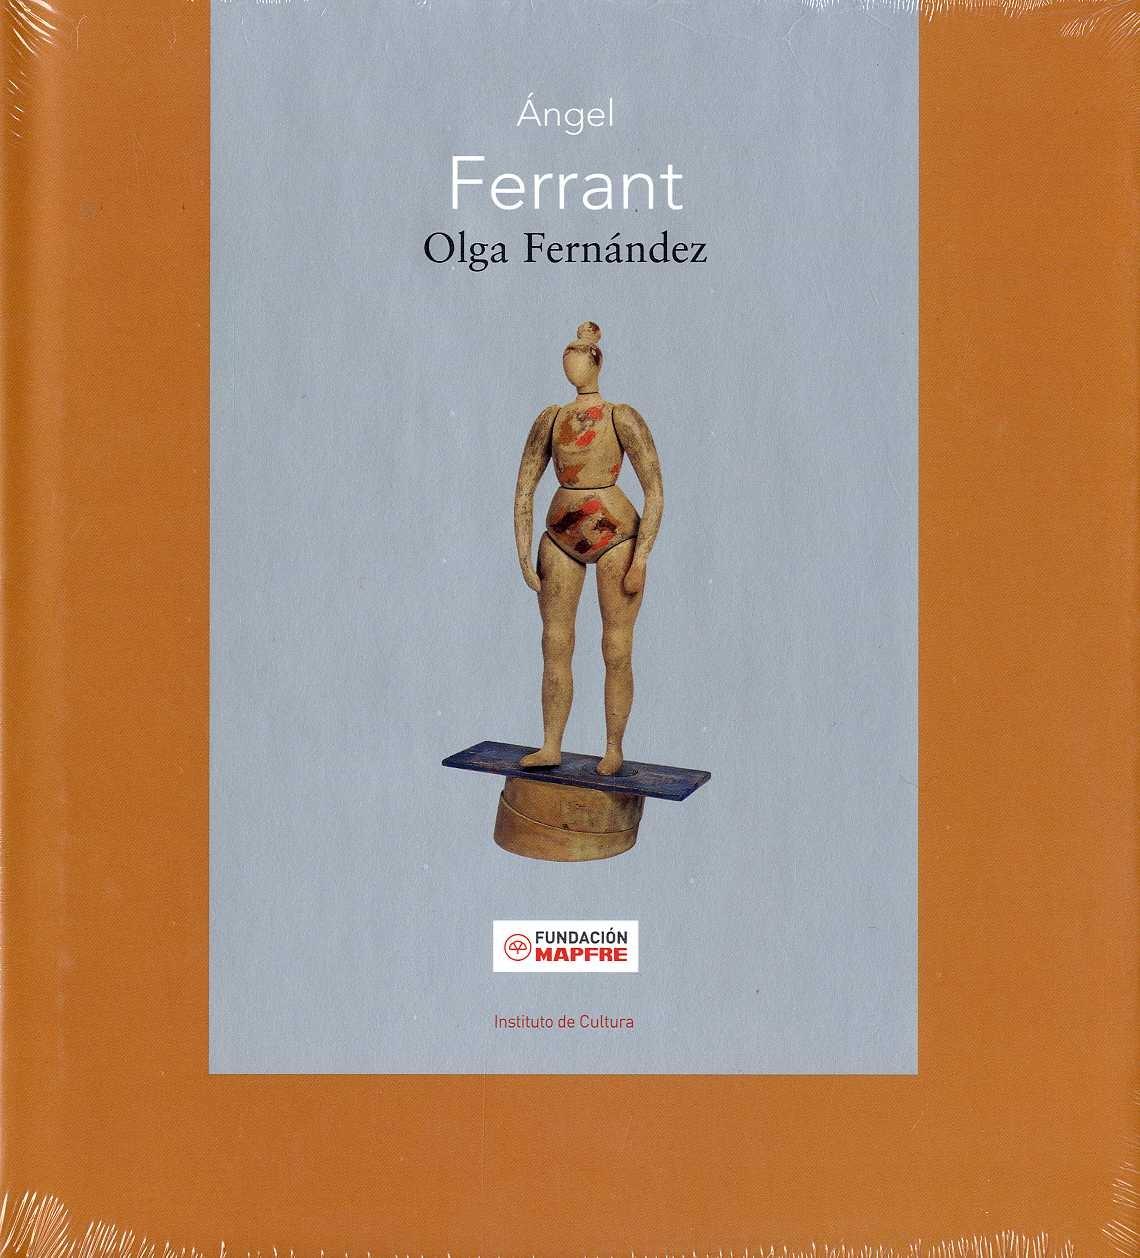 Angel Ferrant